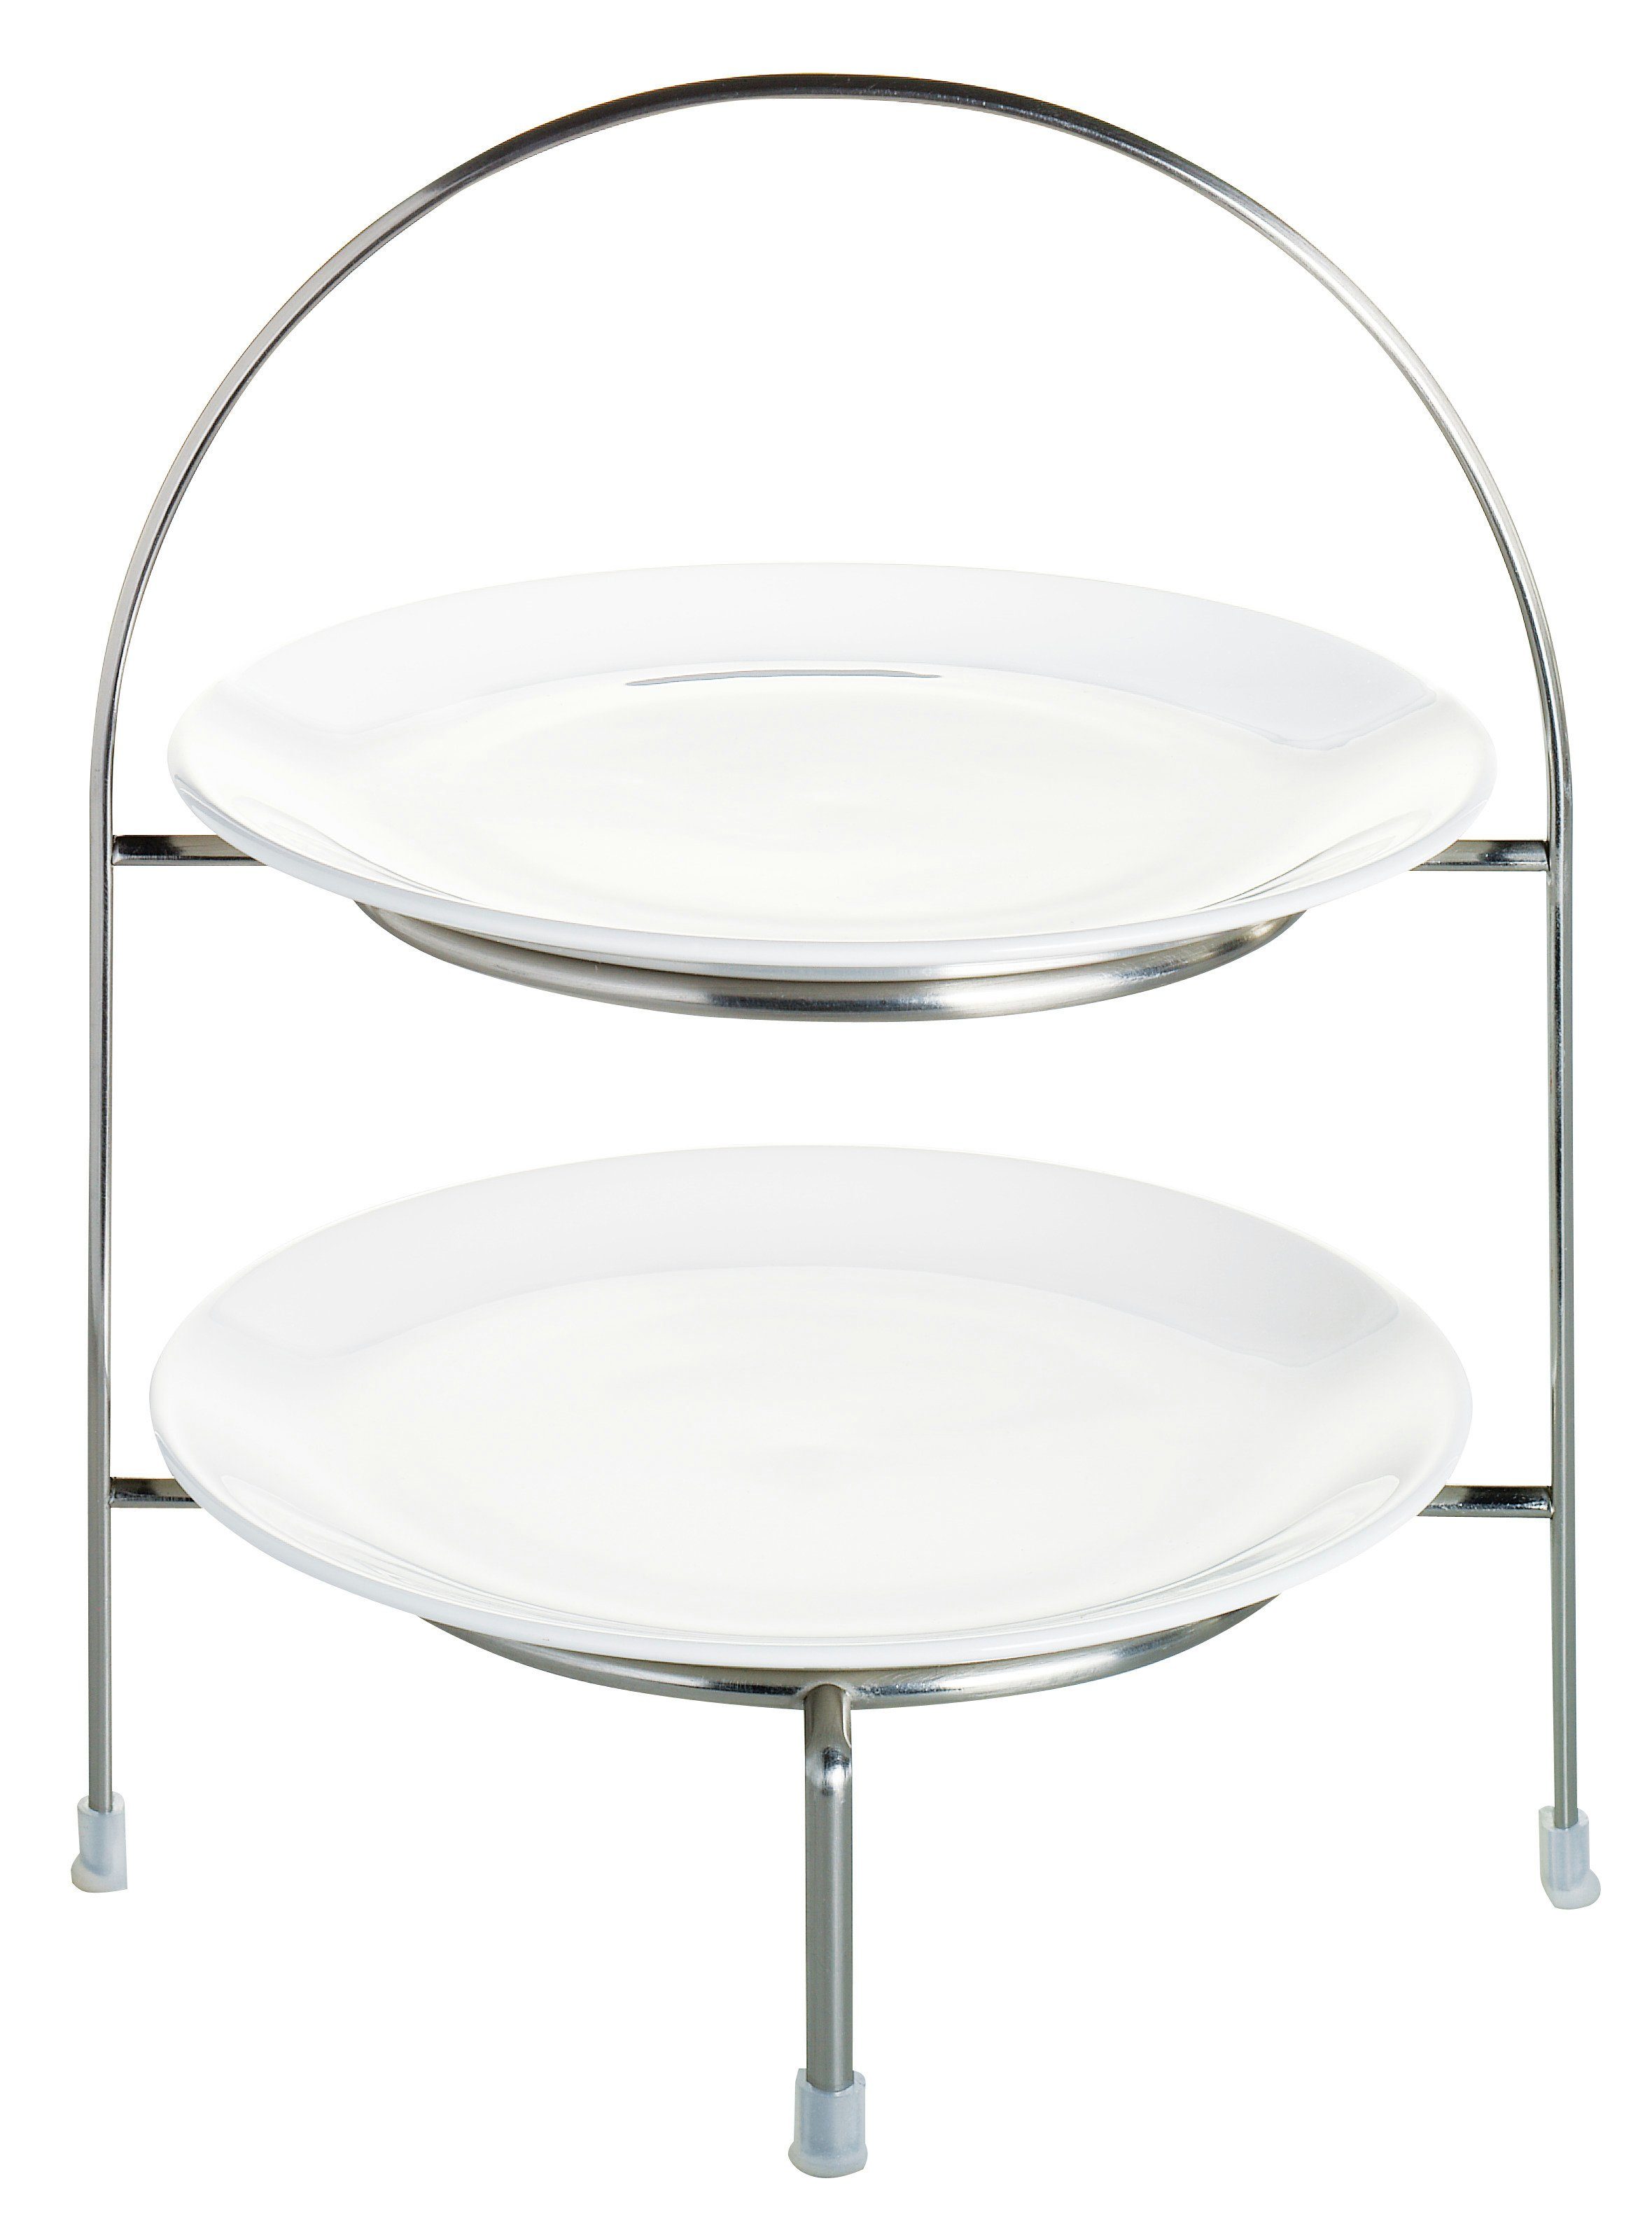 Metall, à ASA Teller Etagere 2-stufig table SELECTION für ohne Lieferung Teller 21 cm,